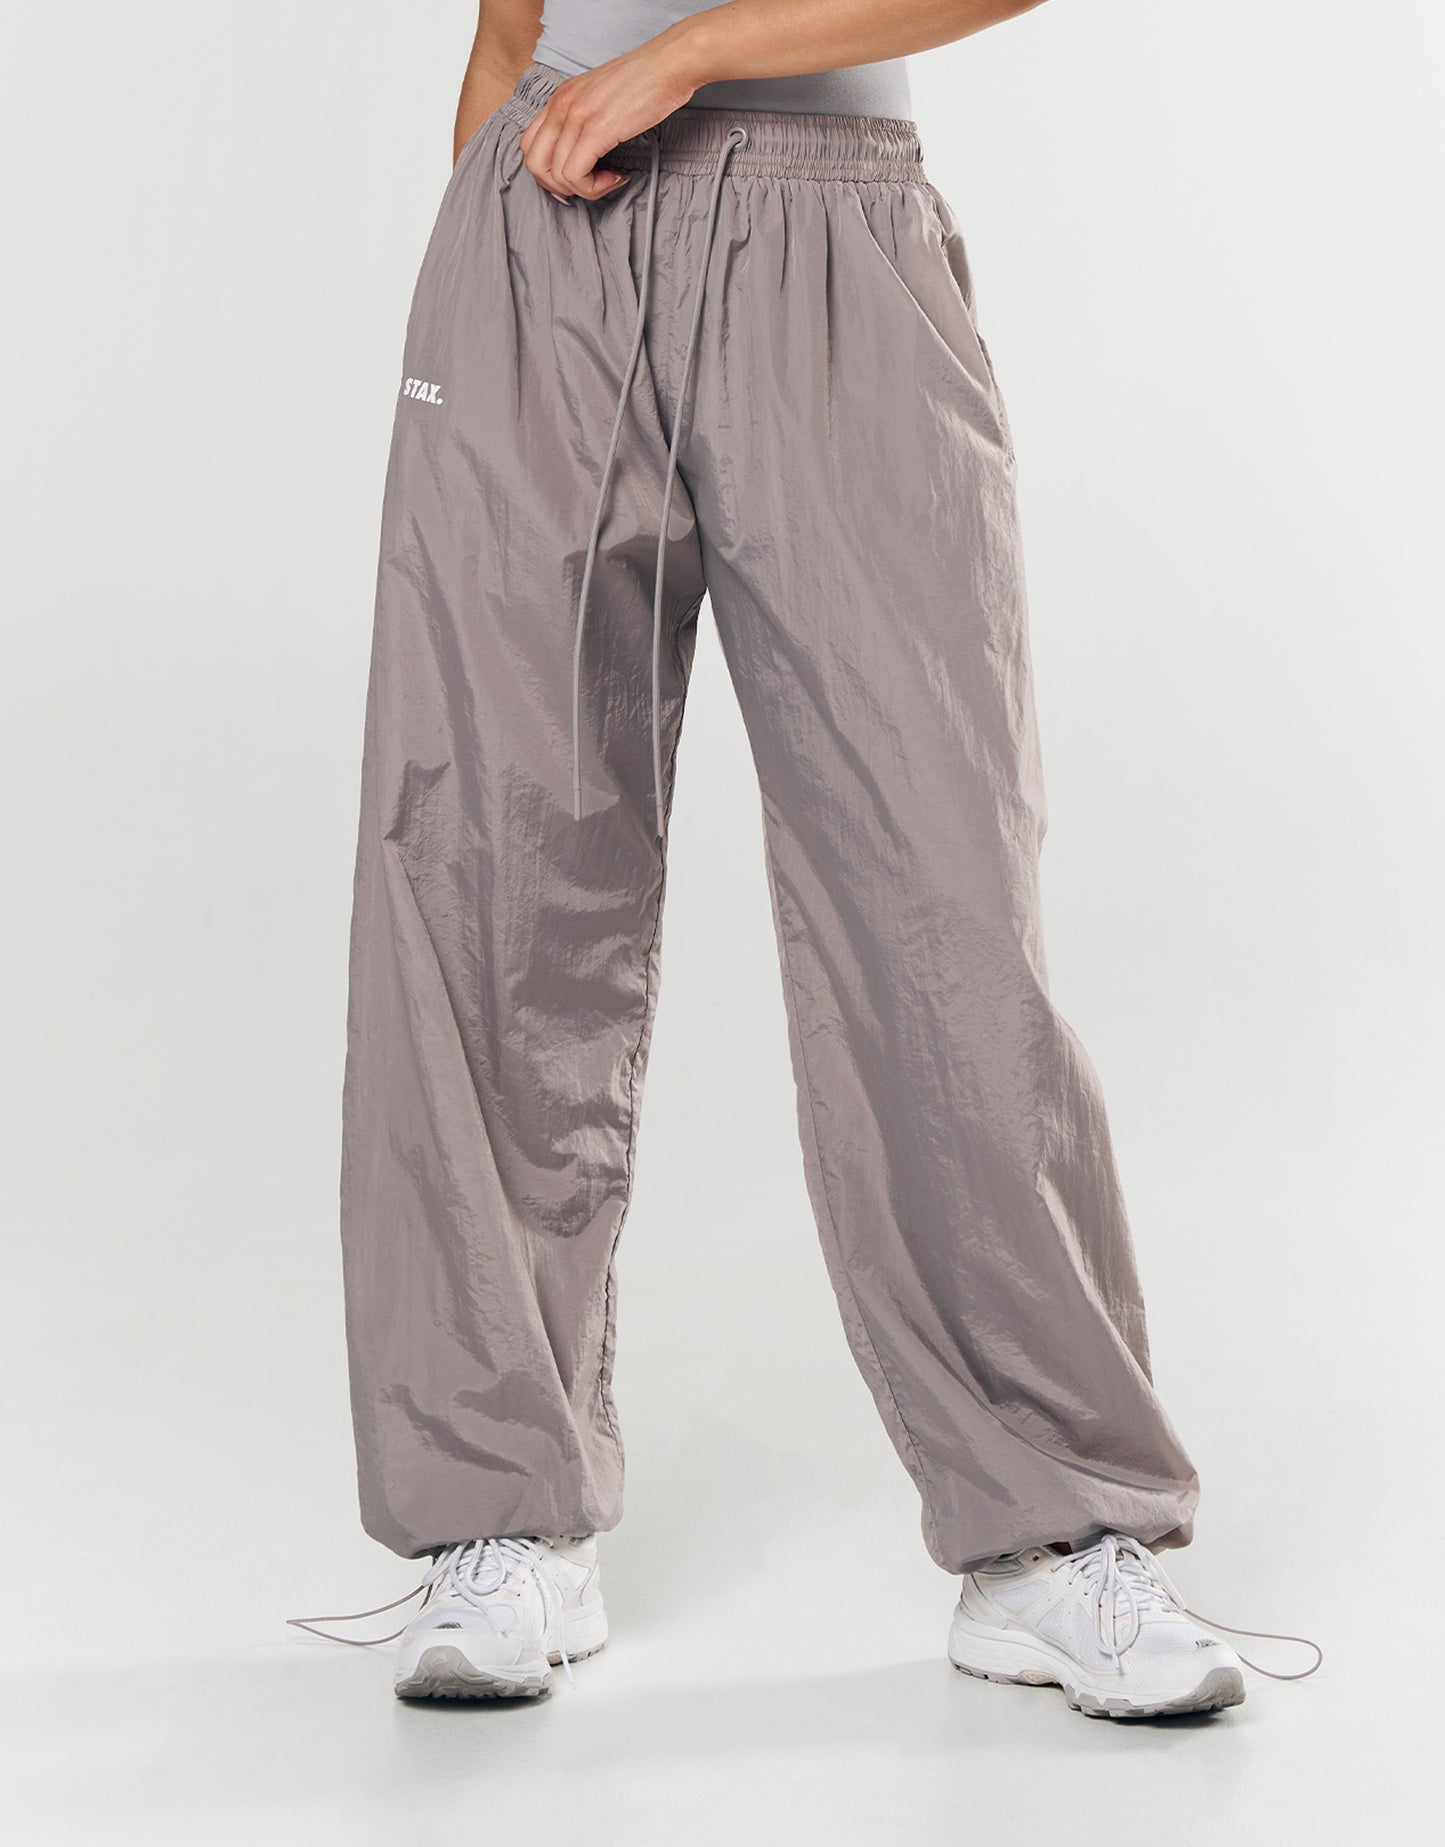 STAX. Parachute Pants- Grey